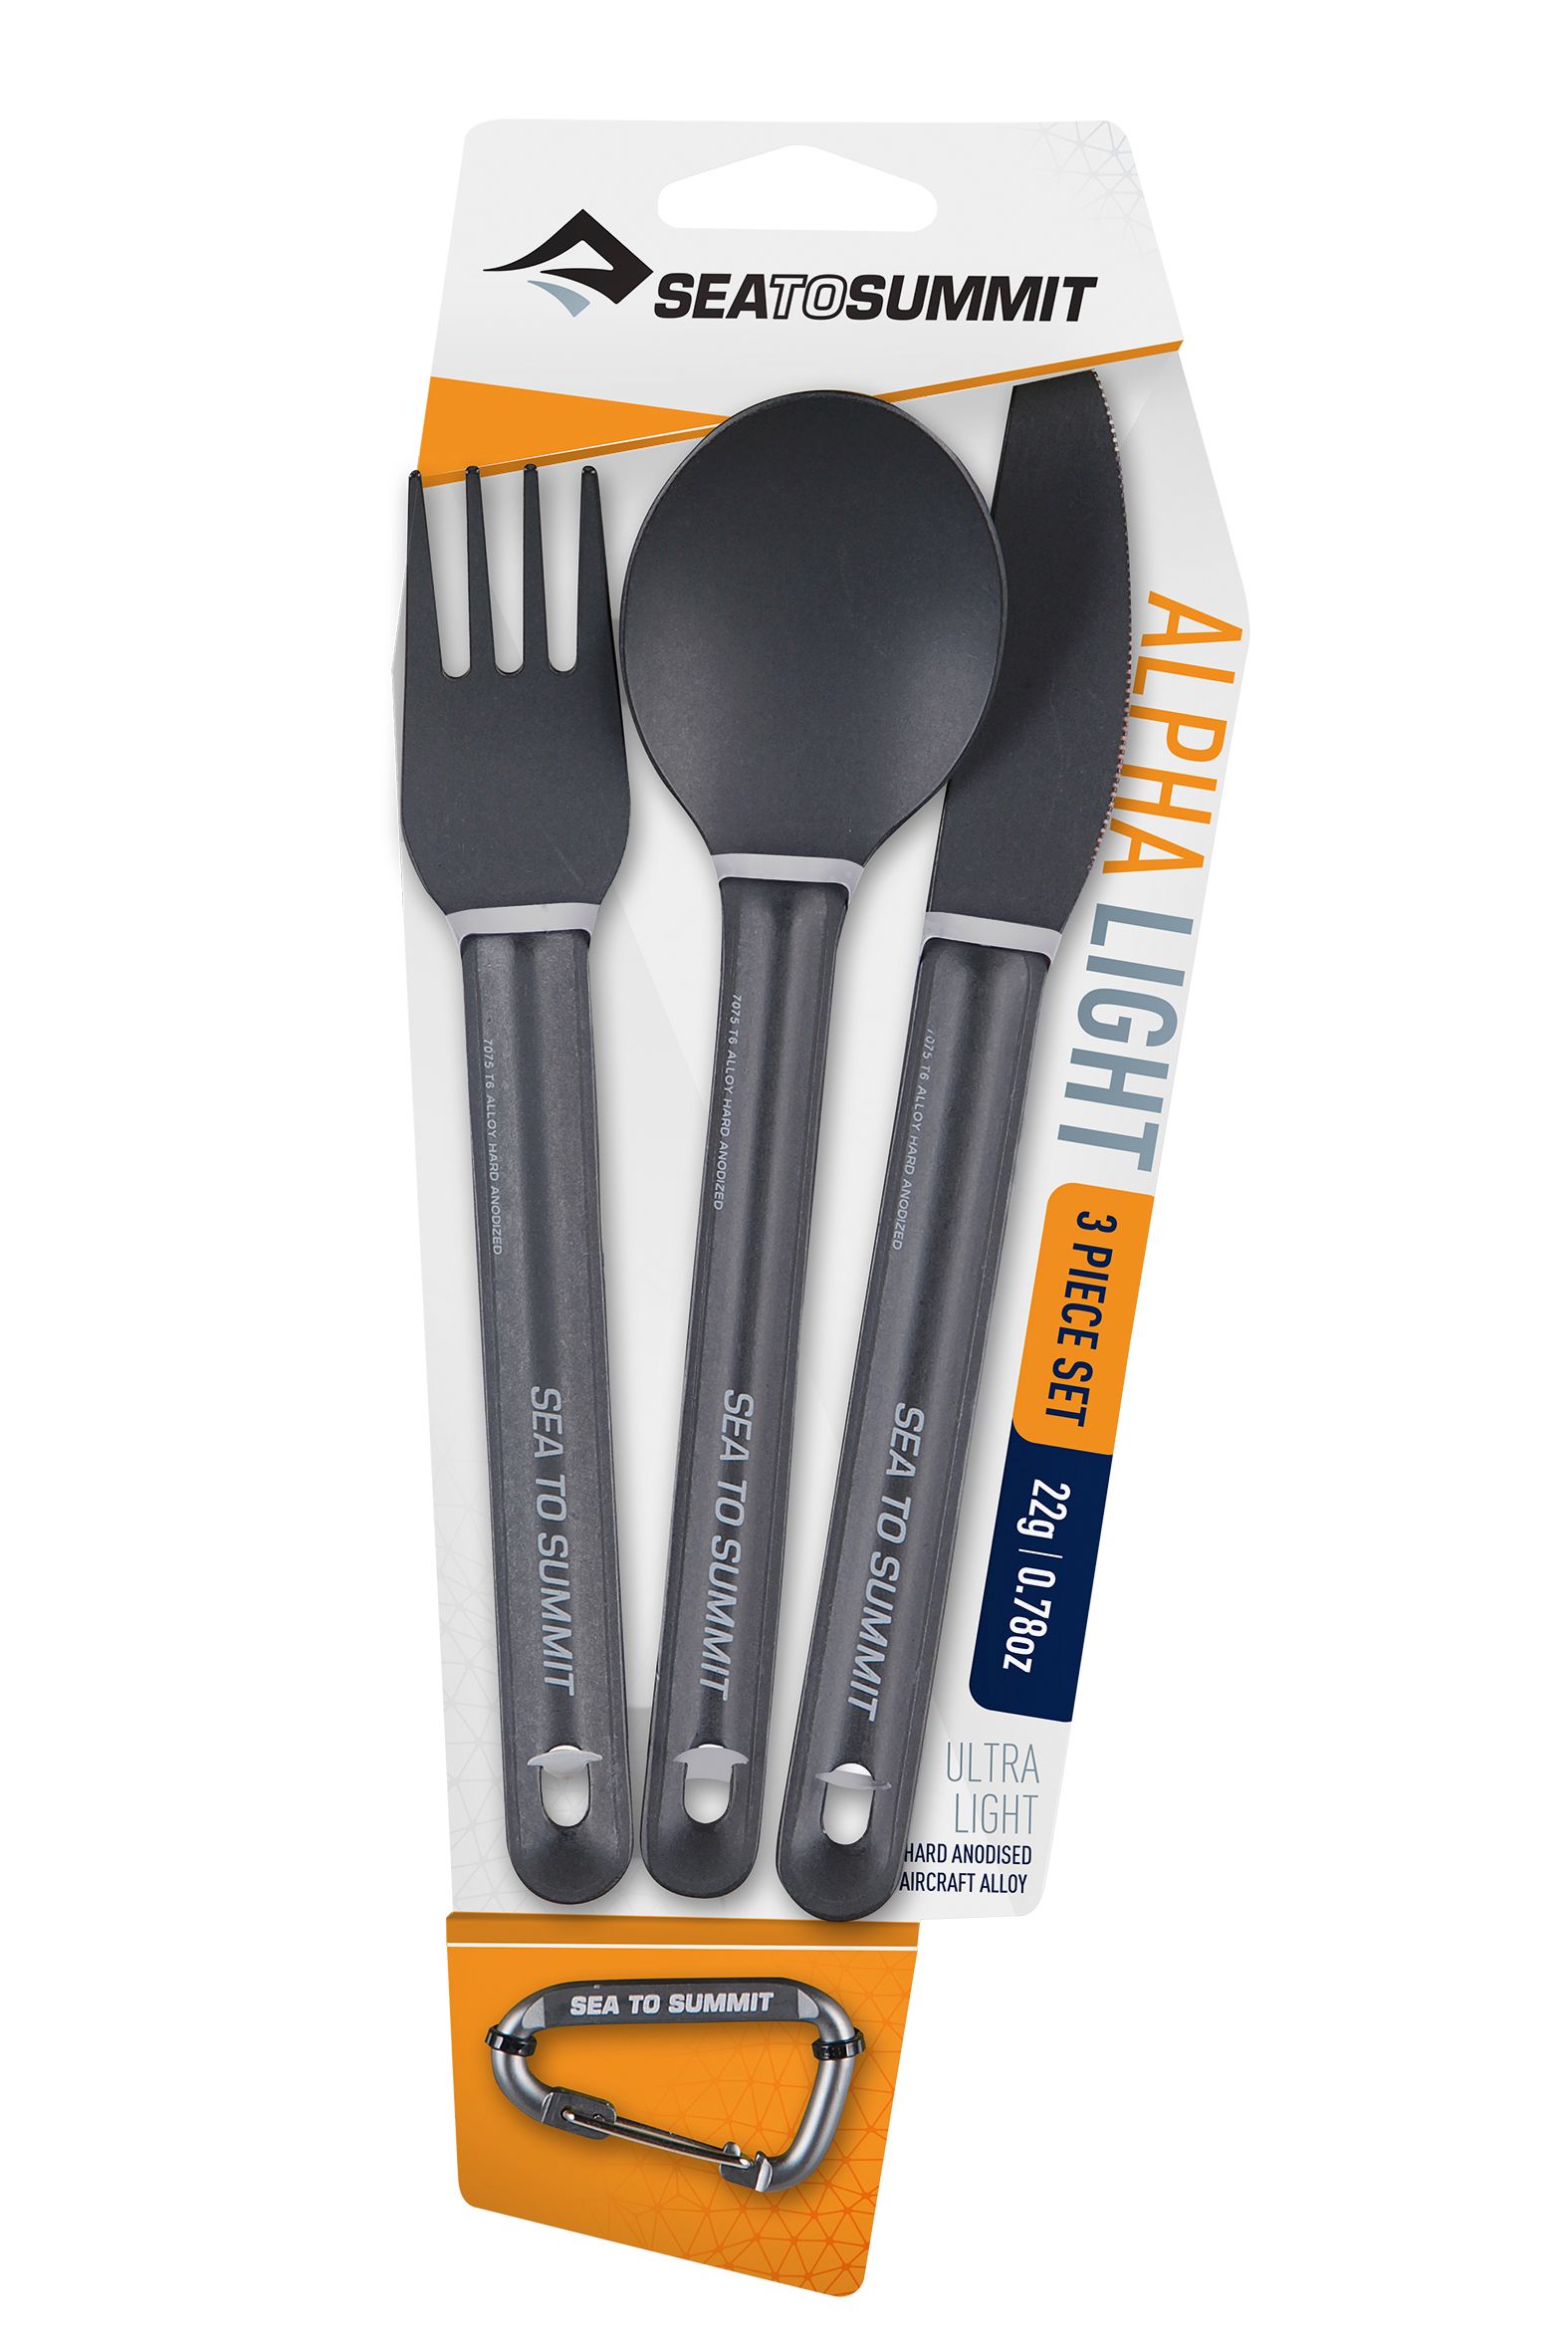 AlphaLight Cutlery Set 3pc (Knife, Fork and Spoon)